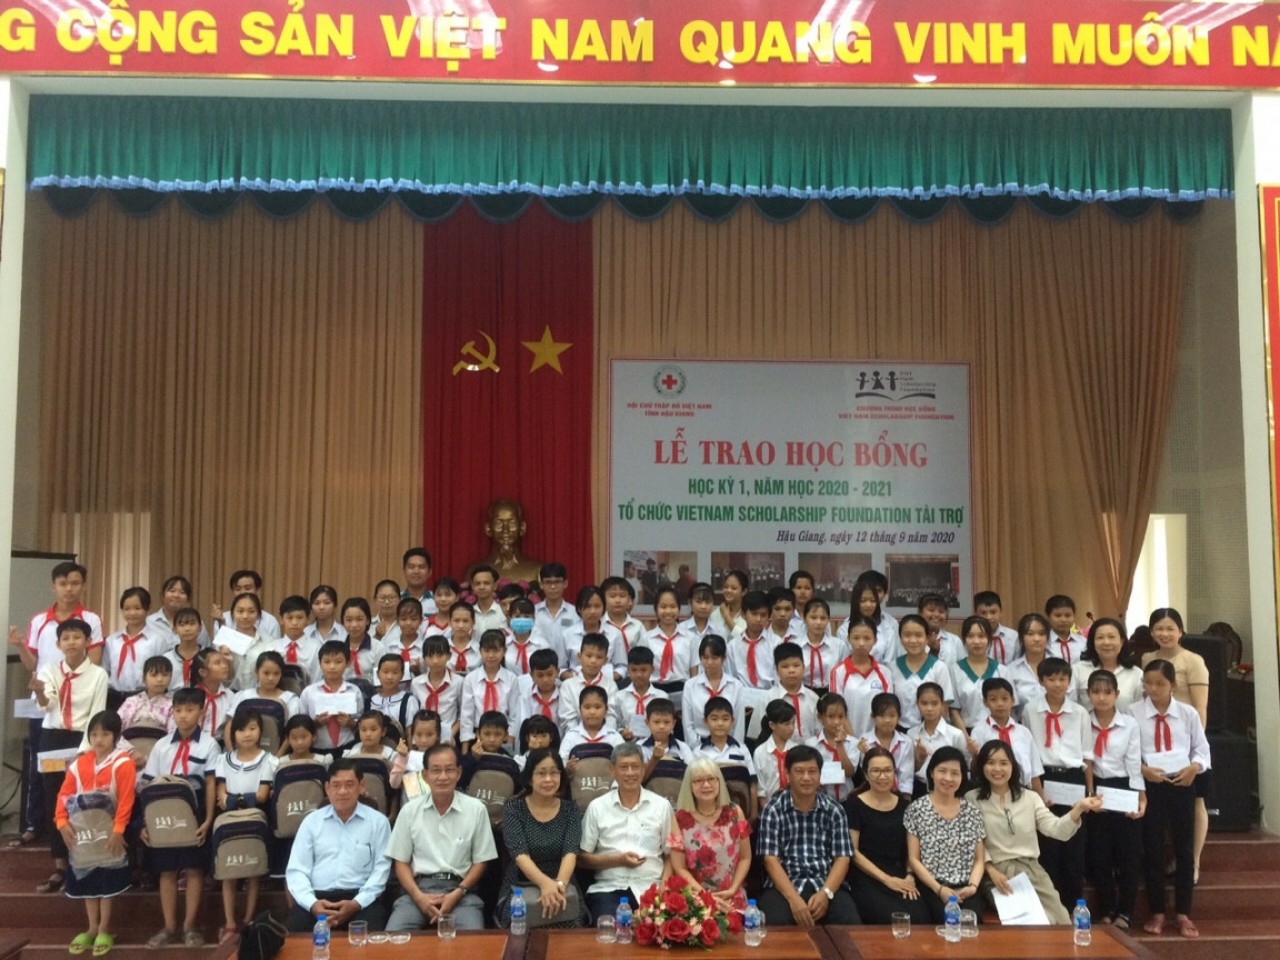 Viet Nam Scholarship Foundation/US award scholarships for poor students.